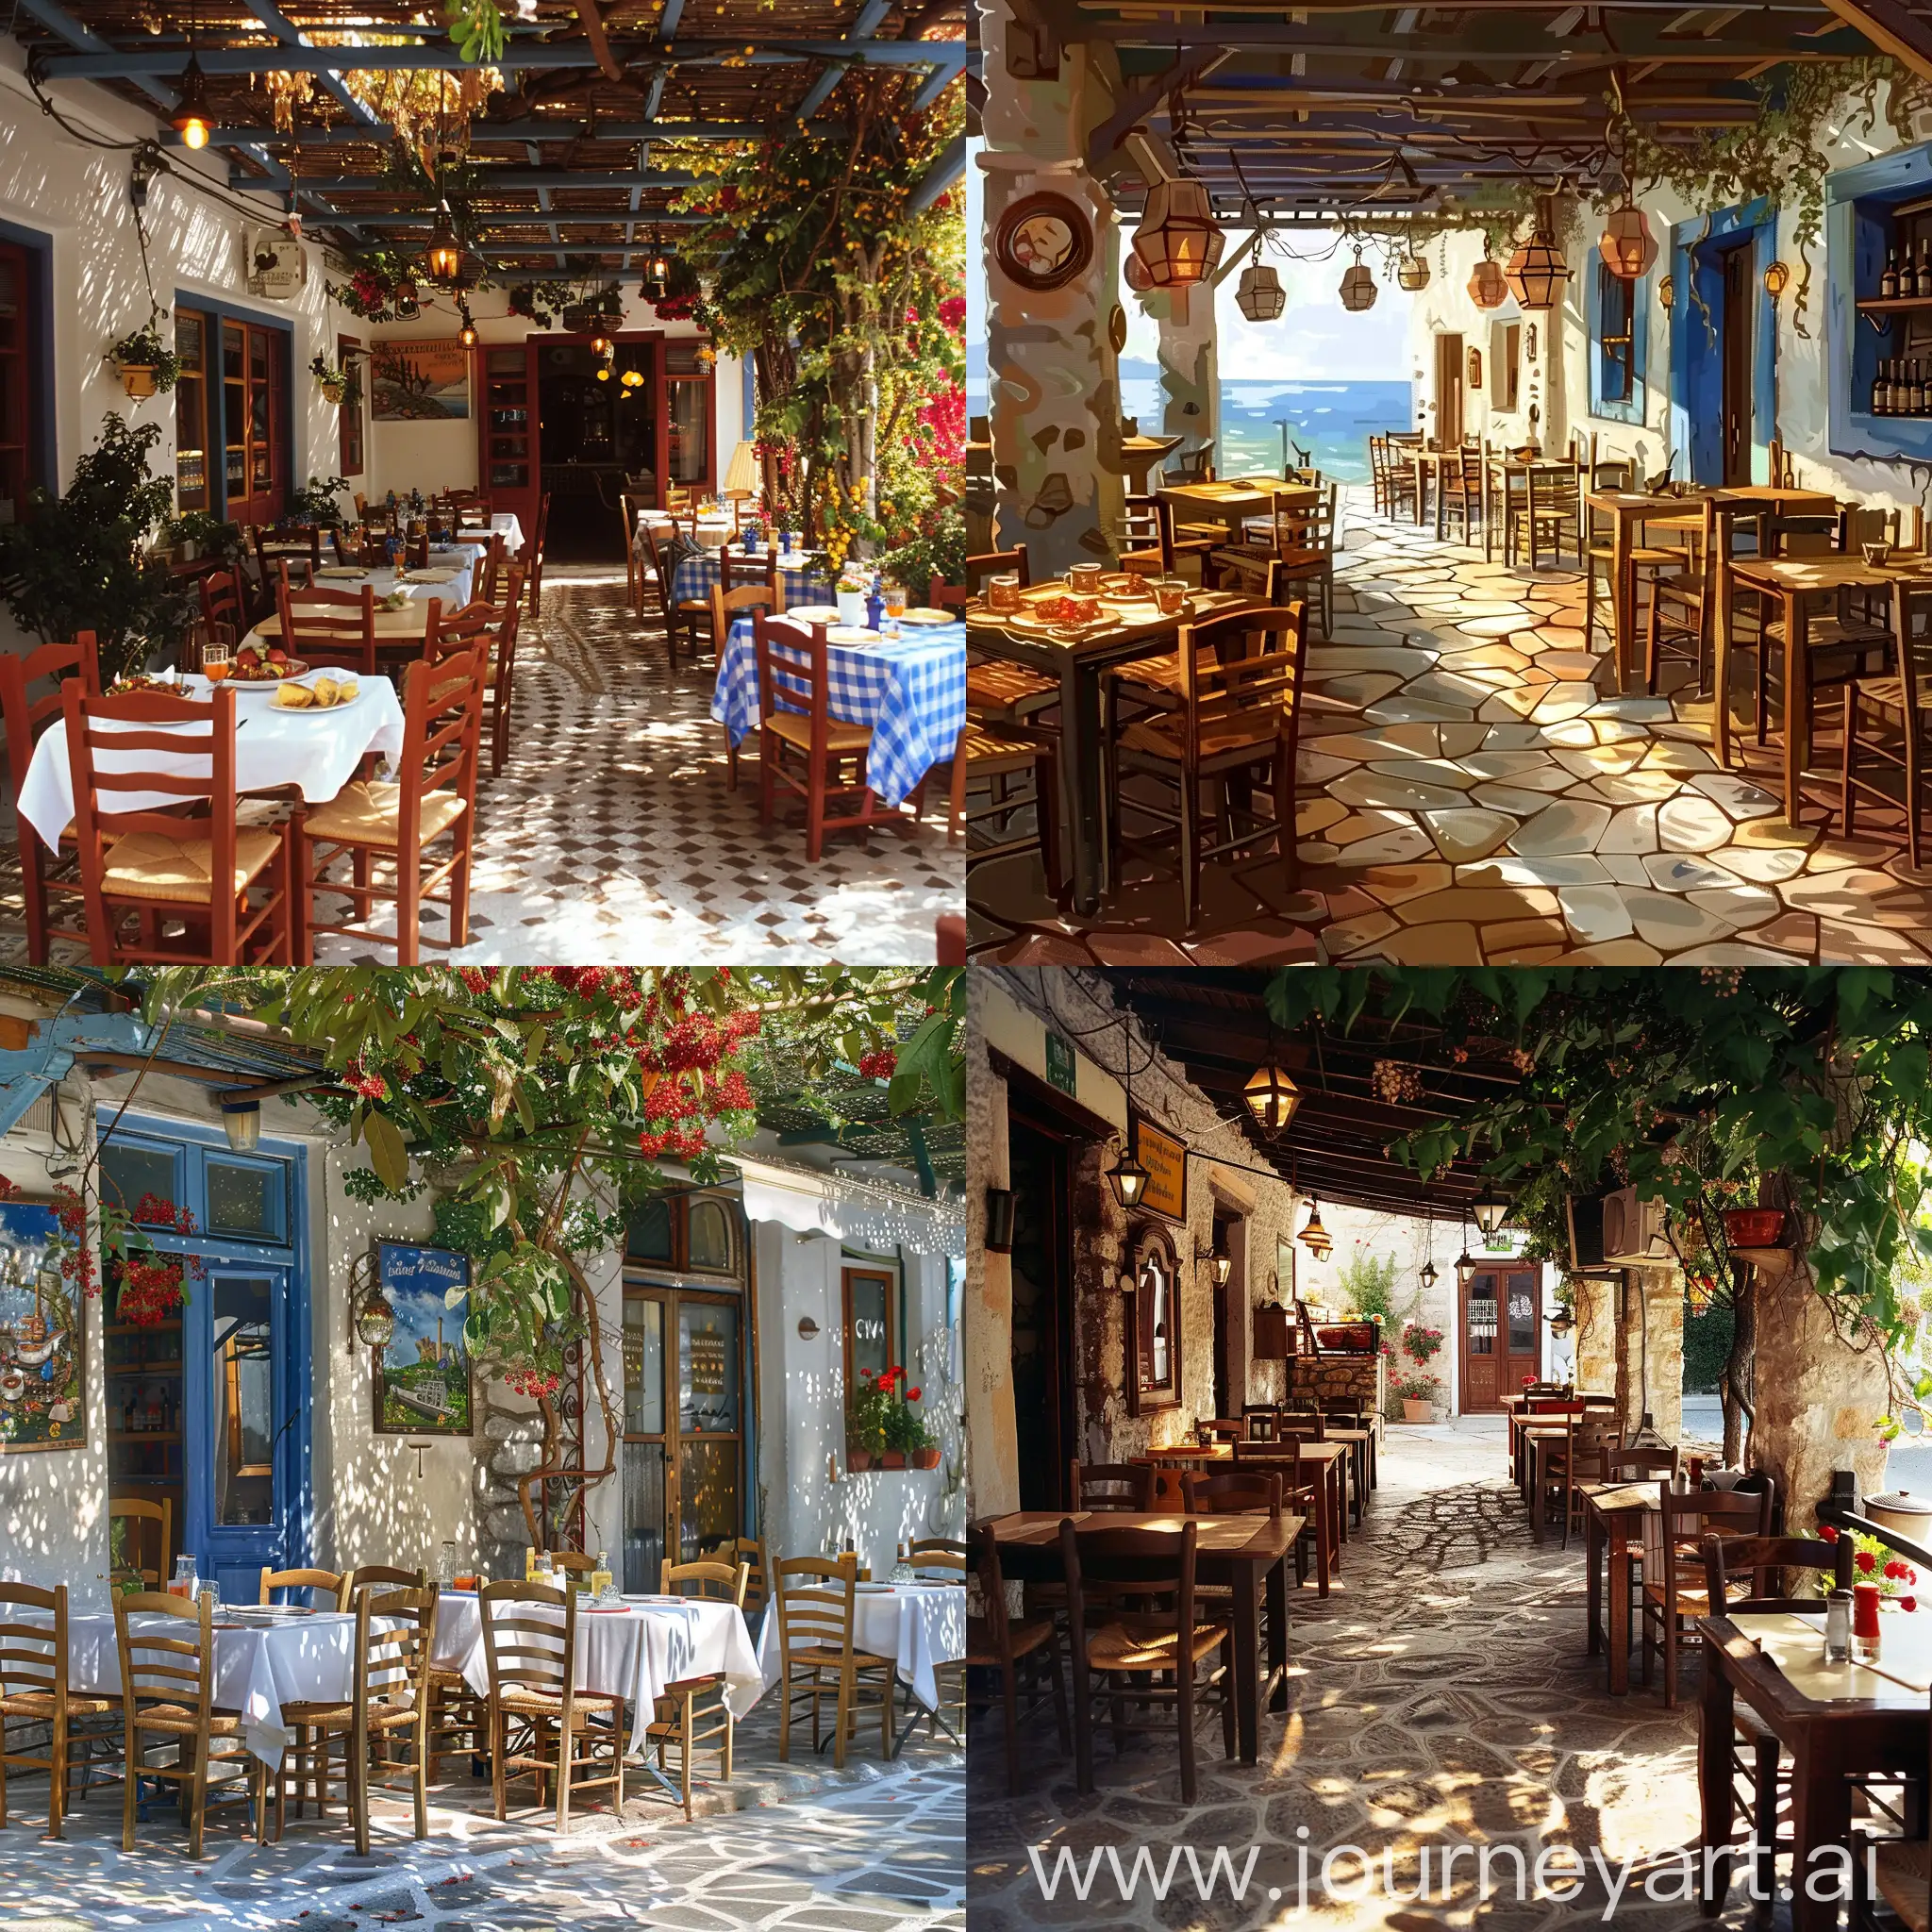 Vibrant-Greek-Taverna-Scene-with-a-11-Aspect-Ratio